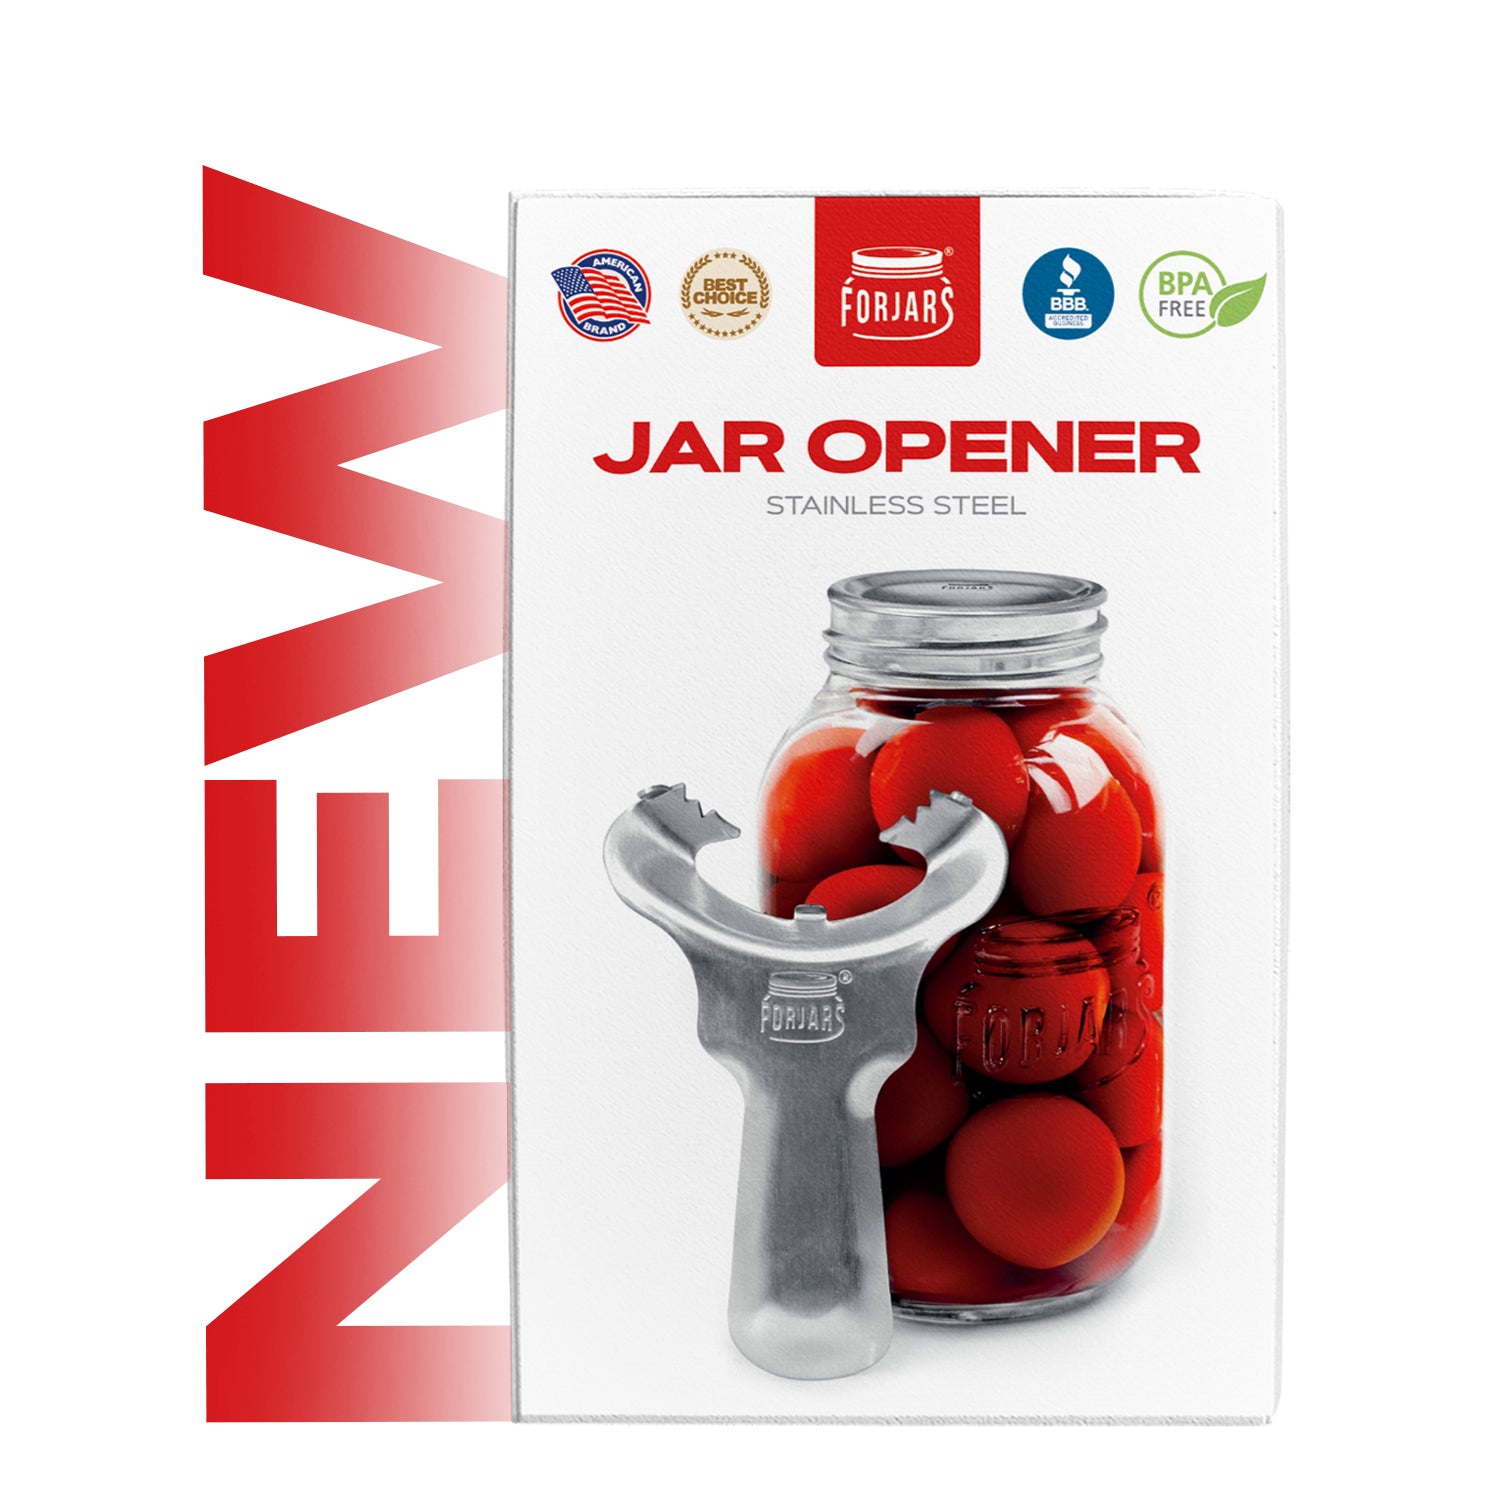 IT WORKS** The Best Jar Opener Kit For Seniors With Arthritis 